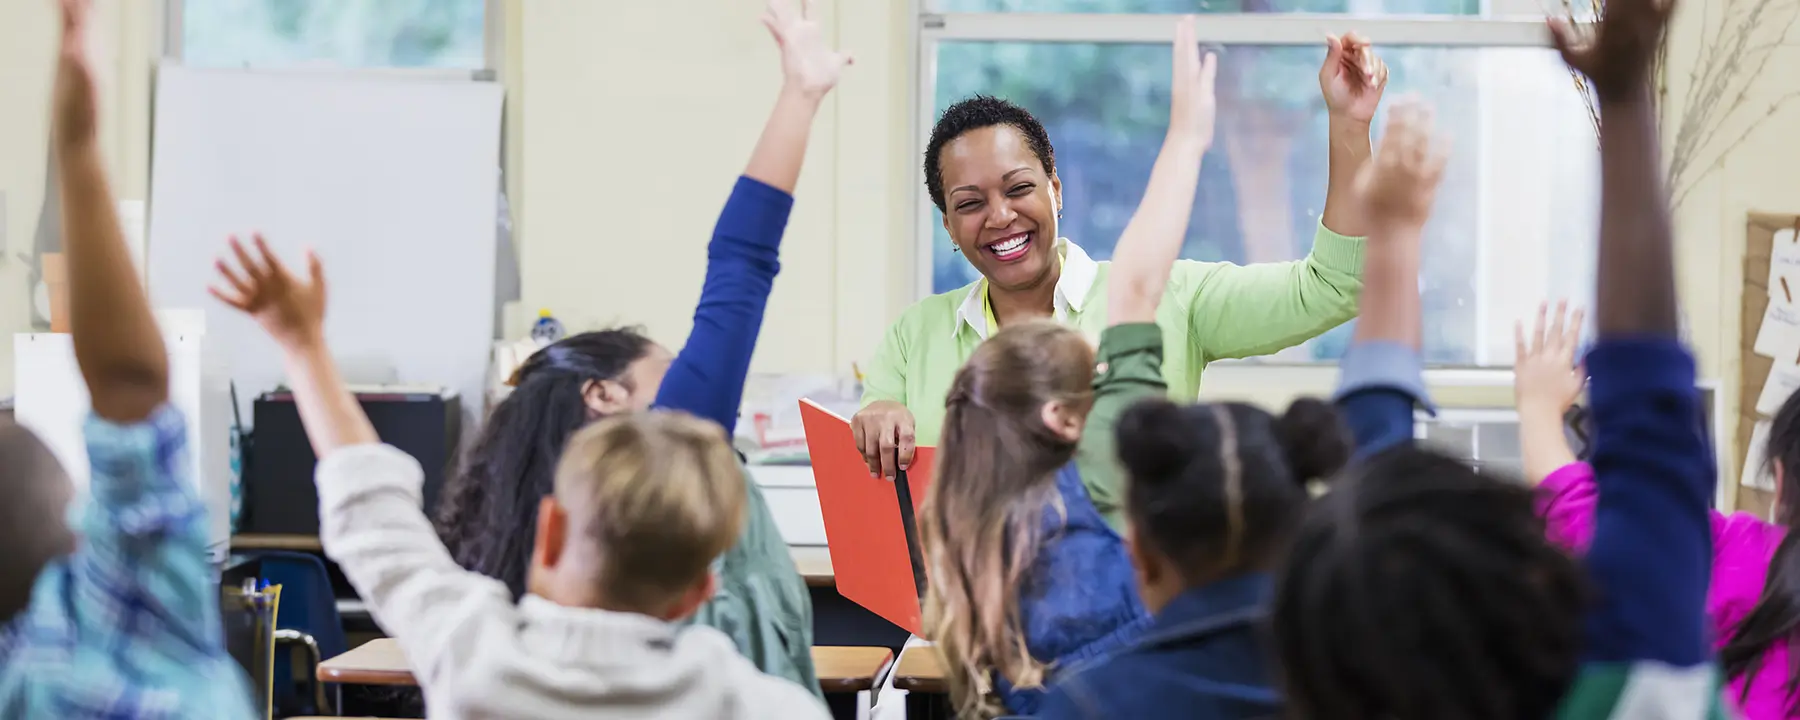 Teacher in a classroom with kids raising their hands